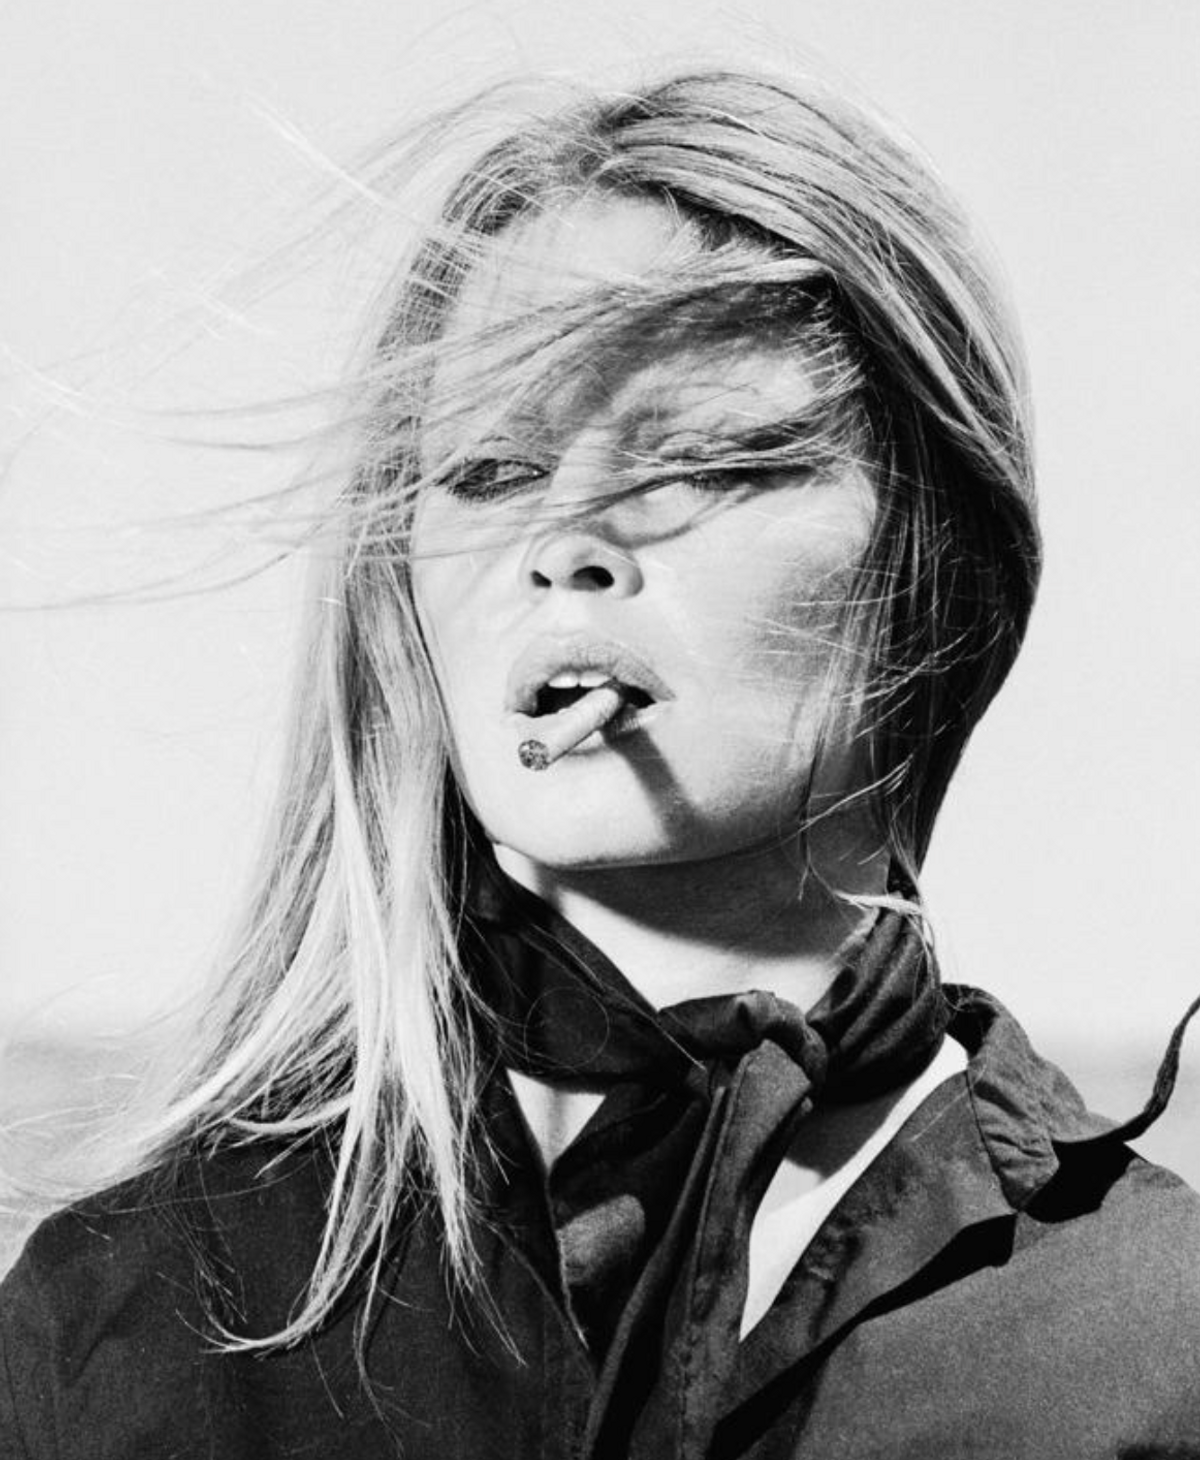 Print of Brigitte Bardot from the set Les Petroleuses (1971)